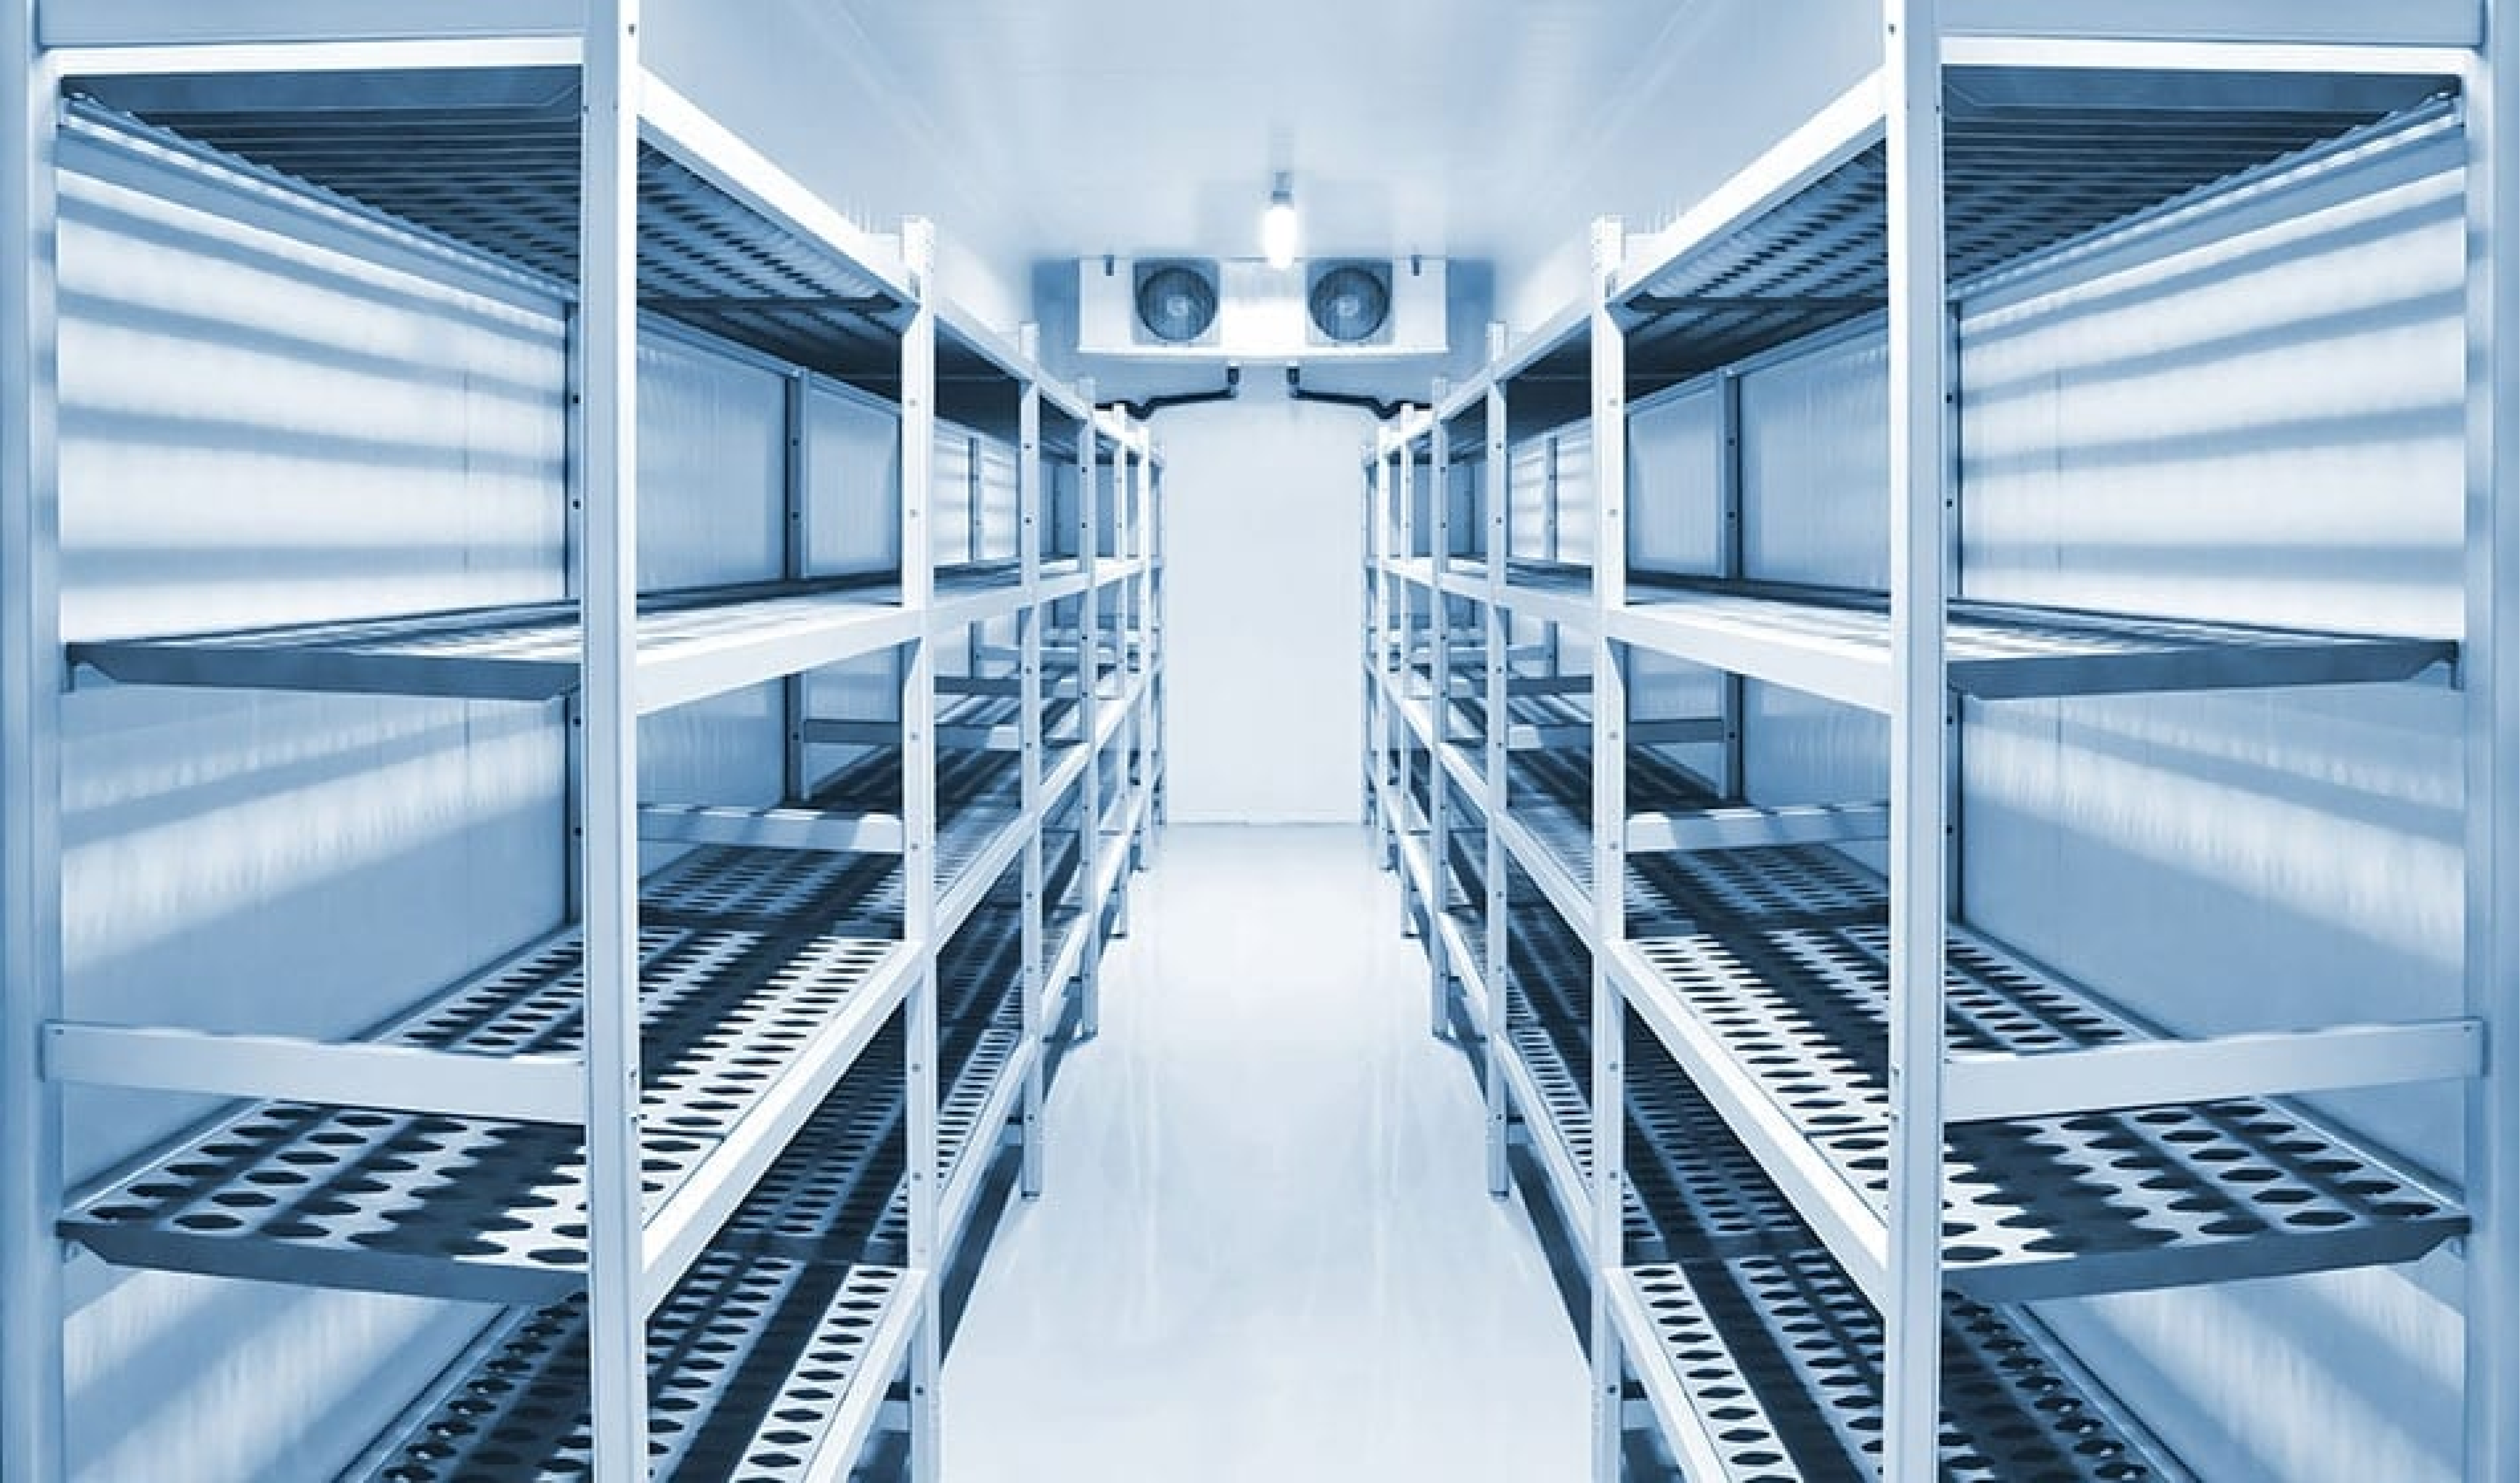 Camera refrigerare Midal Interfrig Service pentru domeniu industrial sau comercial